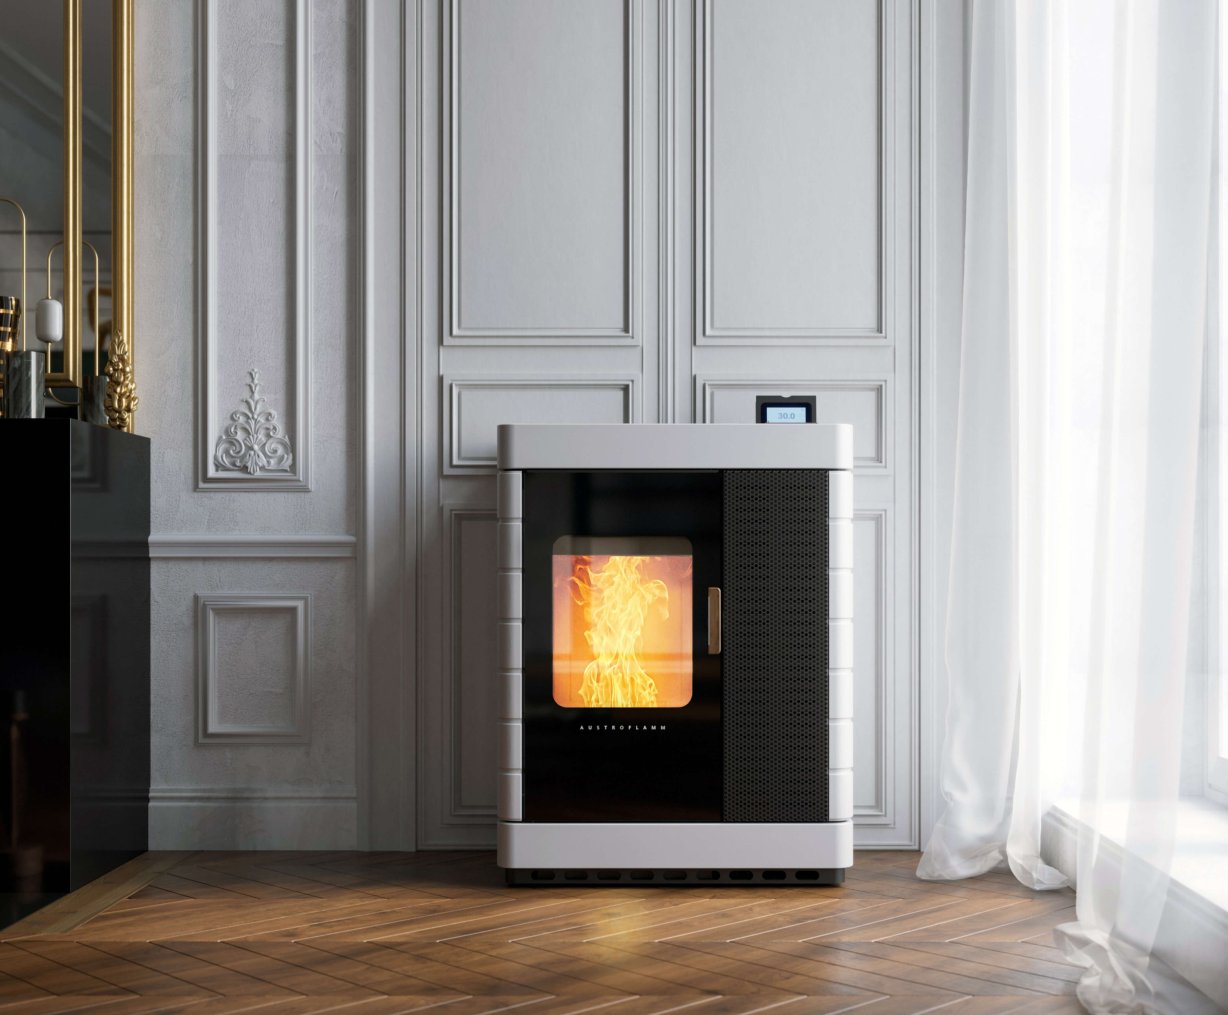 Scotty Duo hybrid stove ambiance photo with ceramic cladding bright white